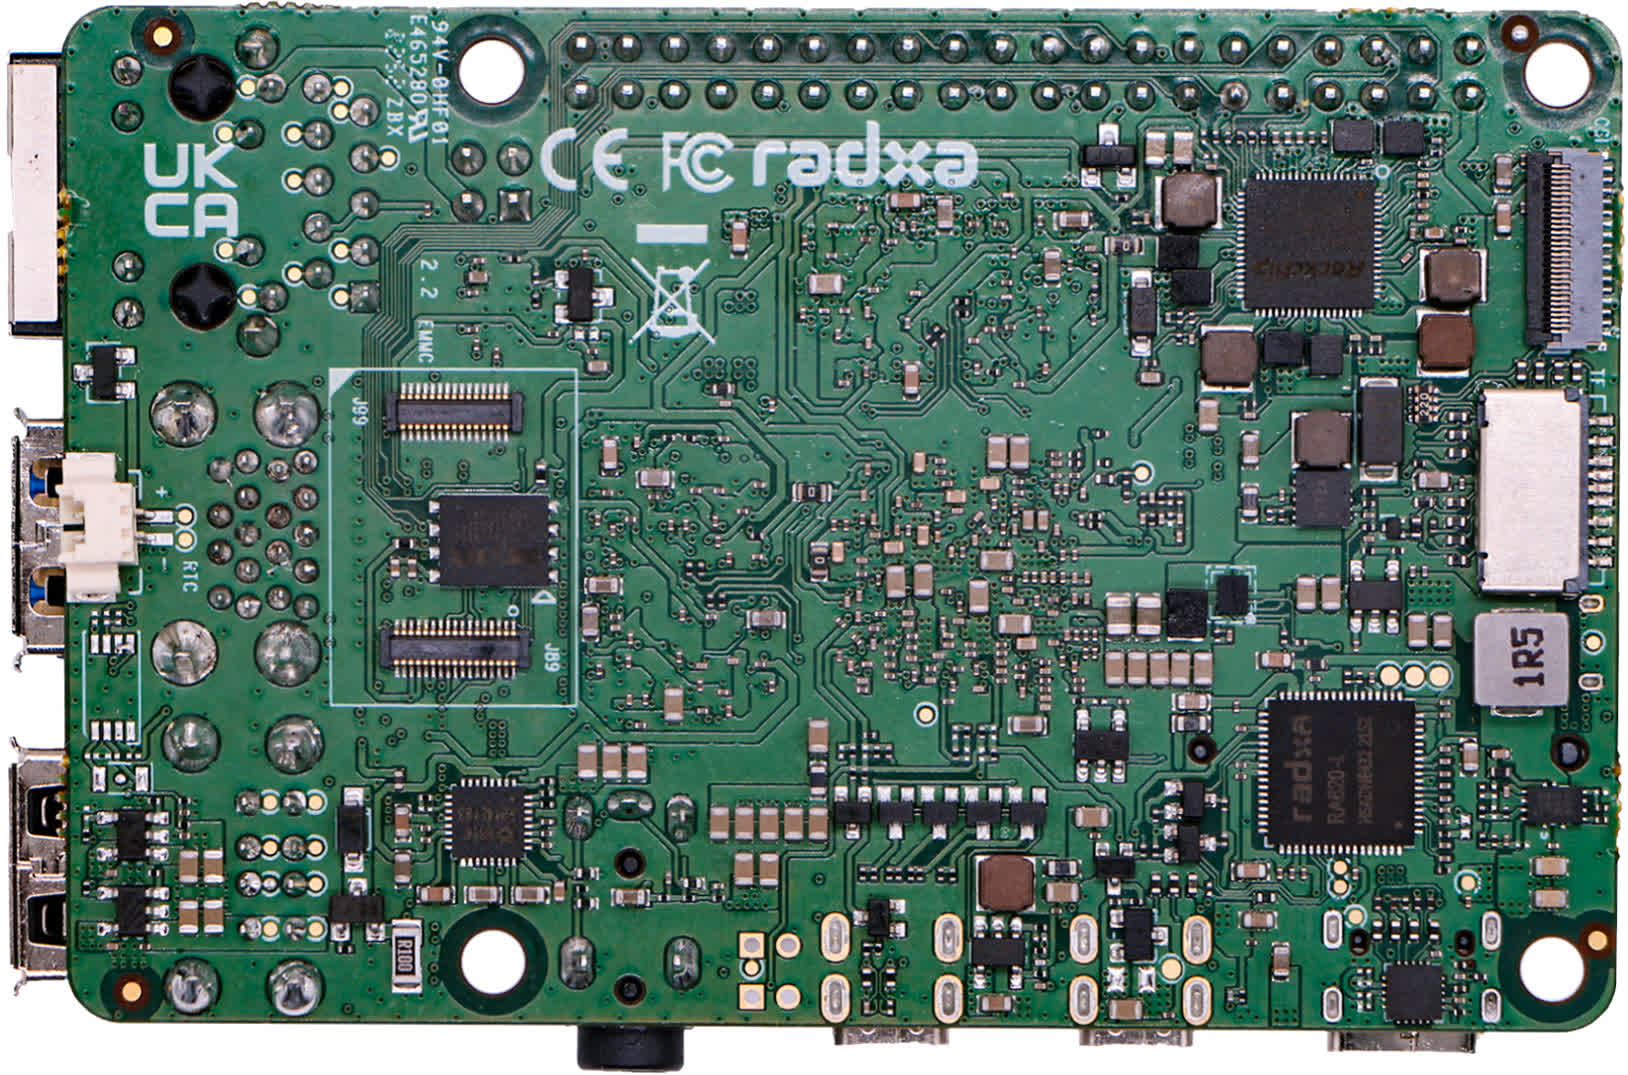 Radxa Rock 5A is a Raspberry Pi choice with far more energy